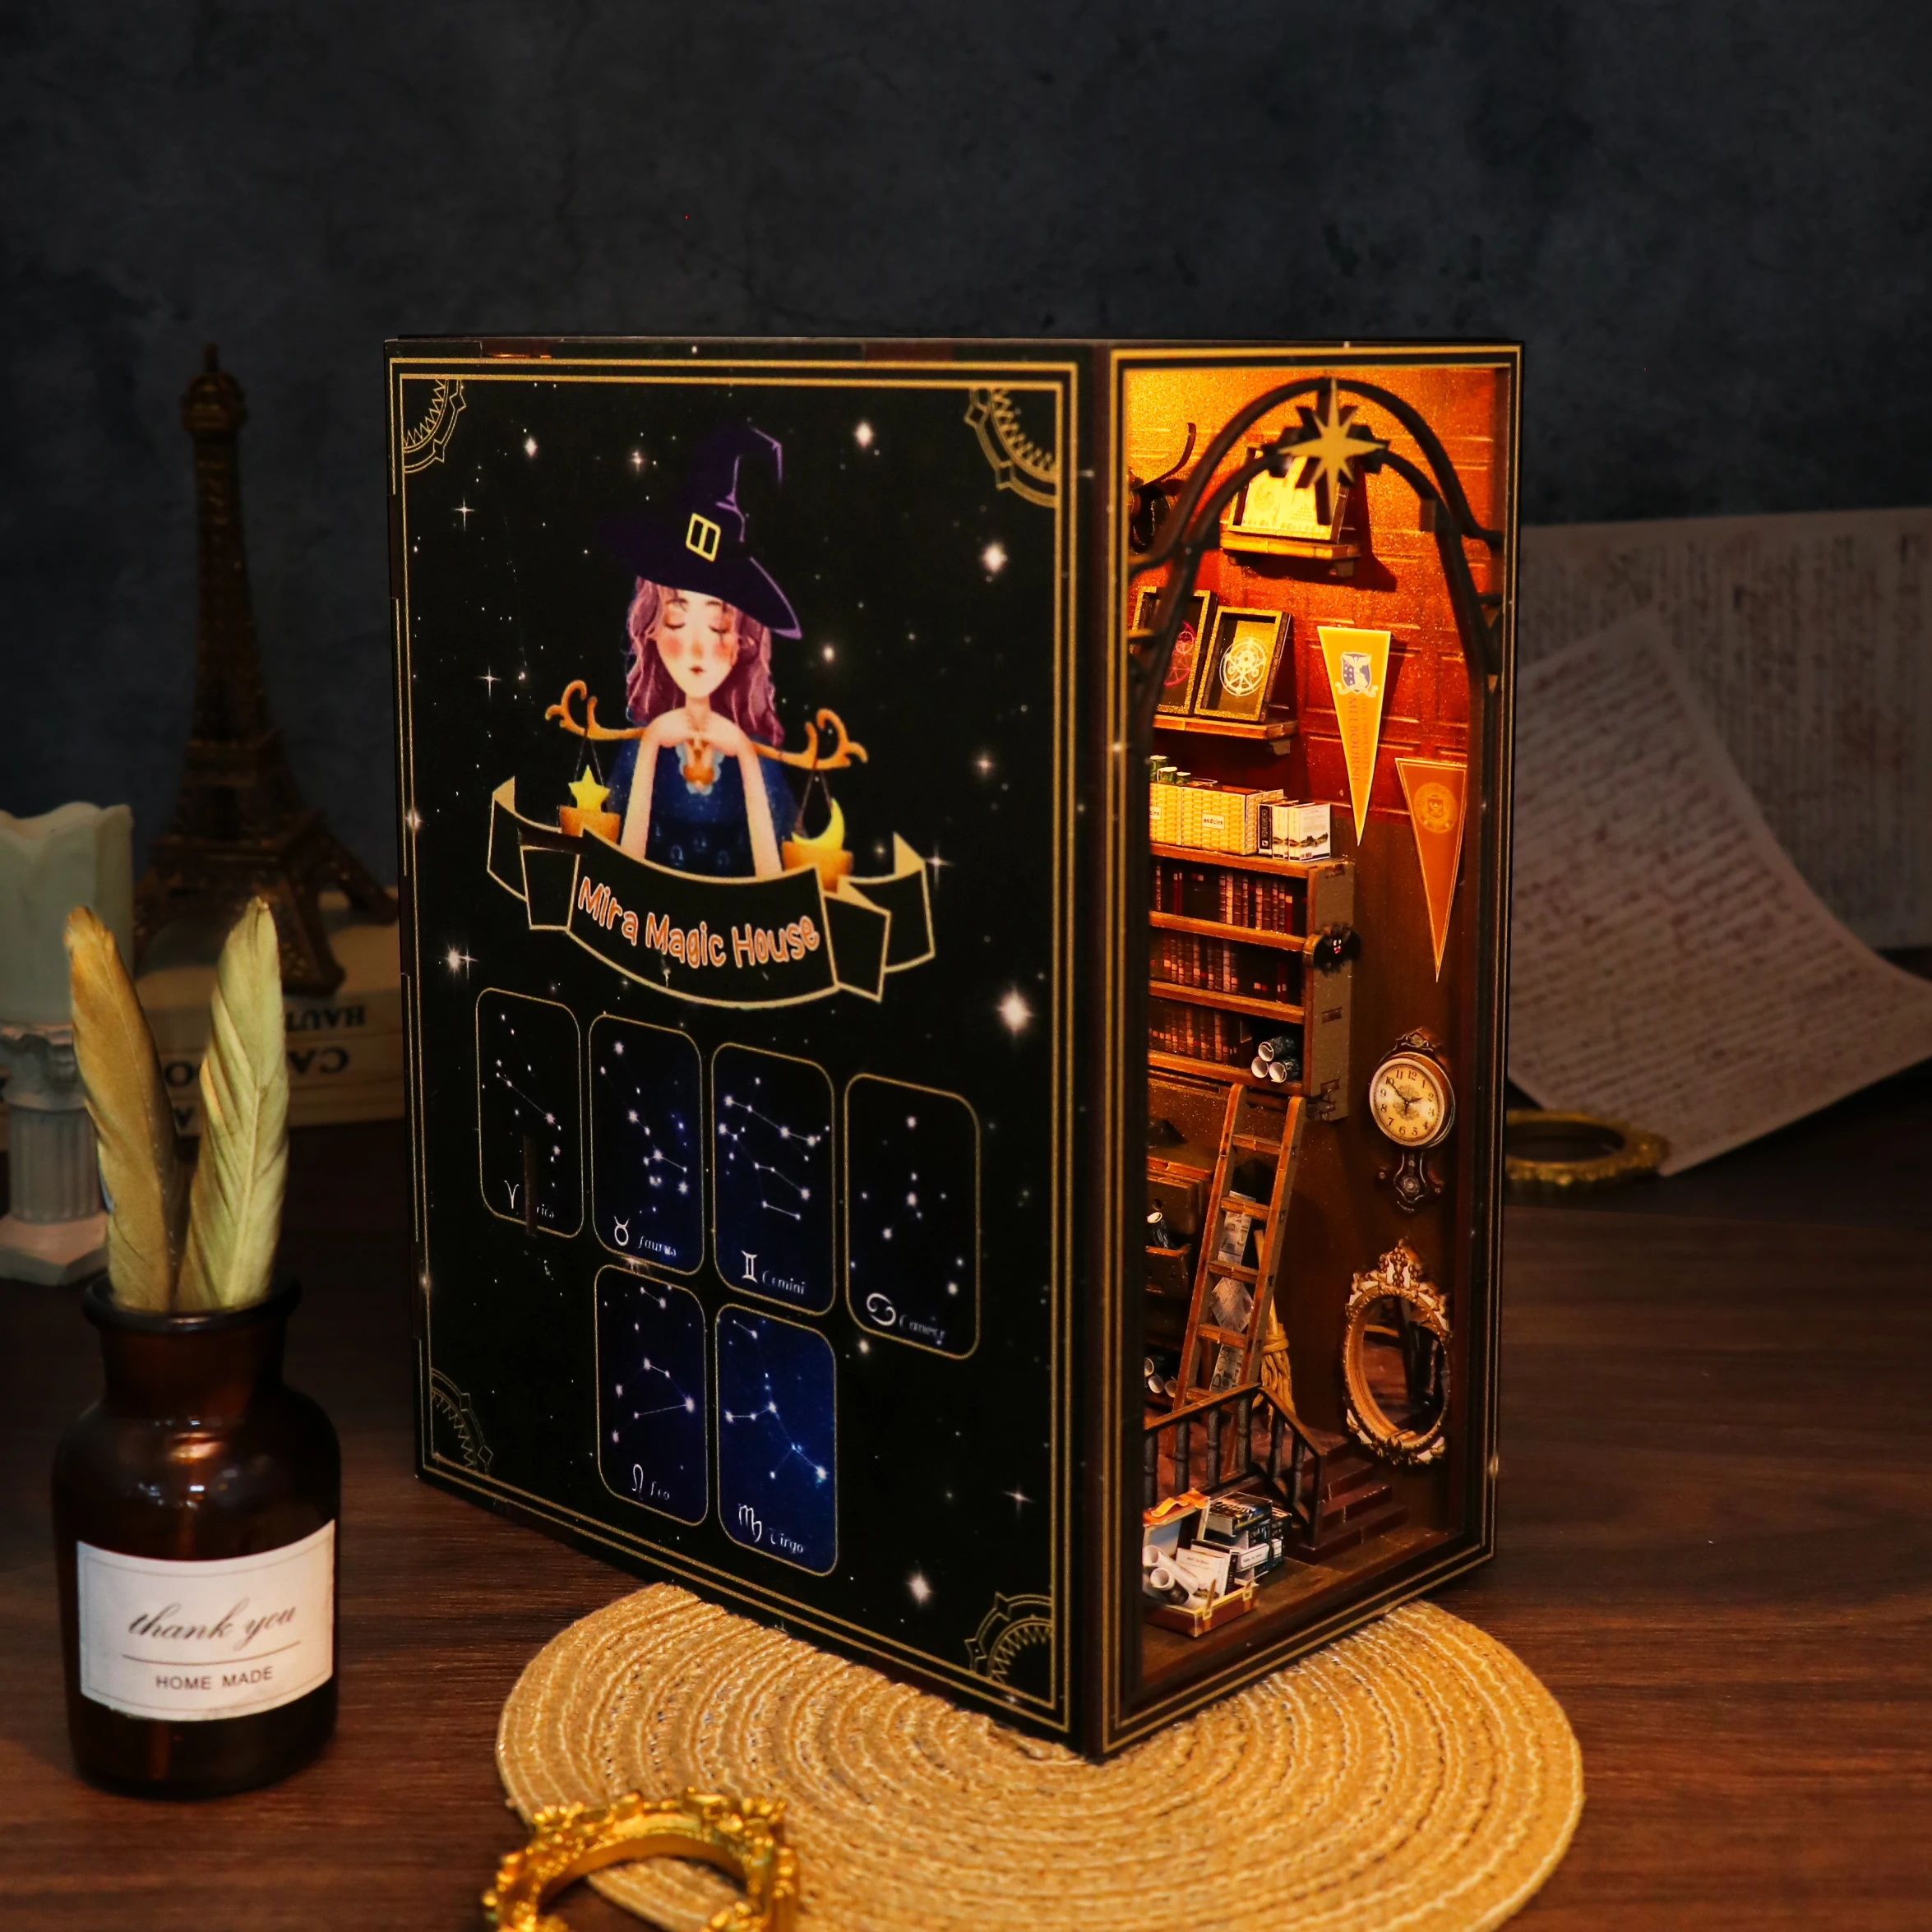 New Diy Wooden Book Nook Shelf Insert Kit Miniature Building Kits Magic House Bookshelf With Light Bookends Friends Adults Gifts